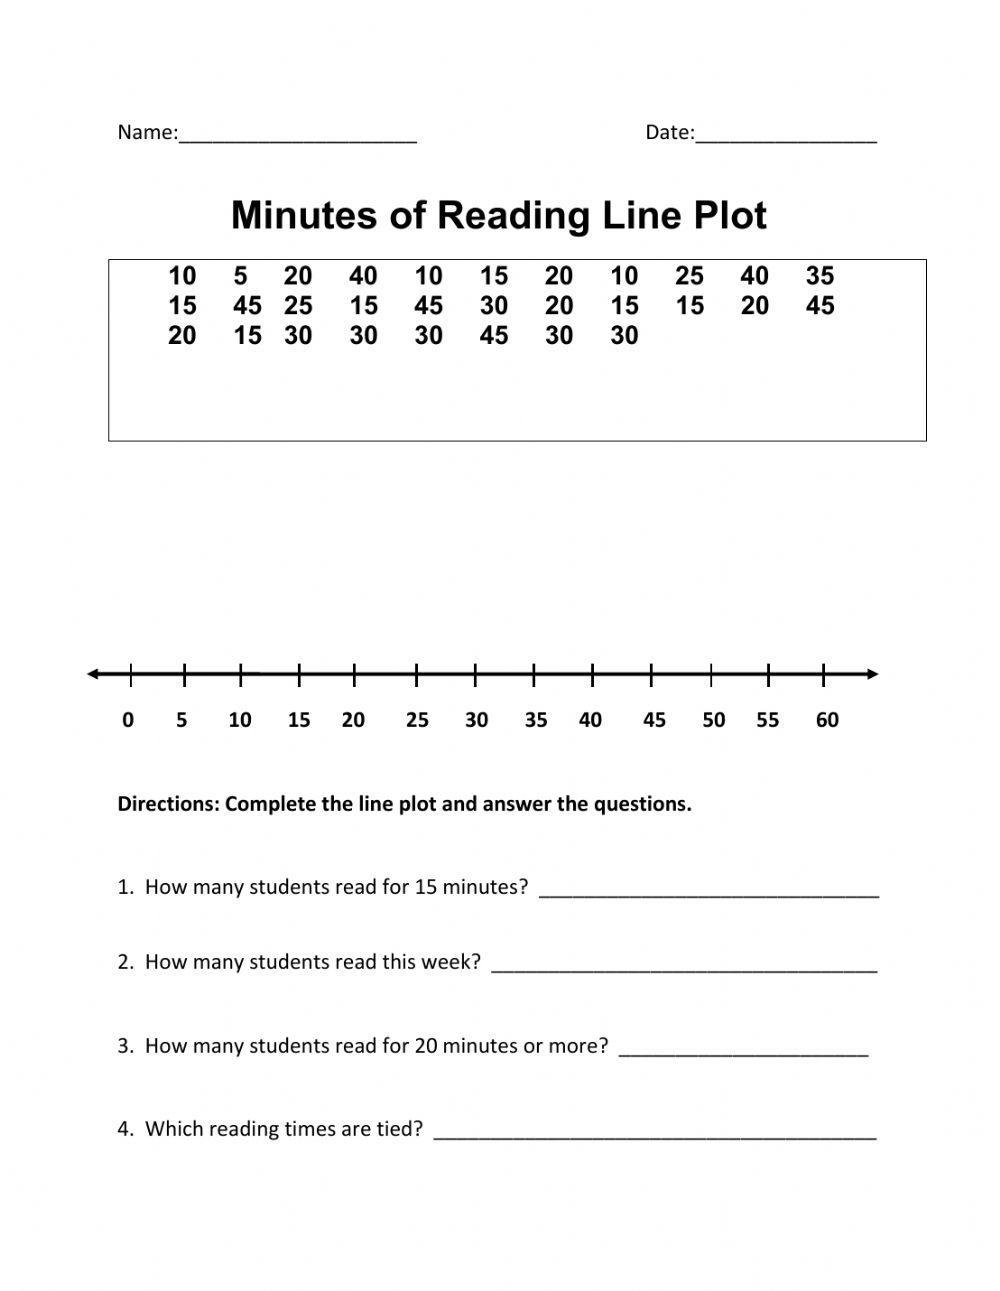 Line plots